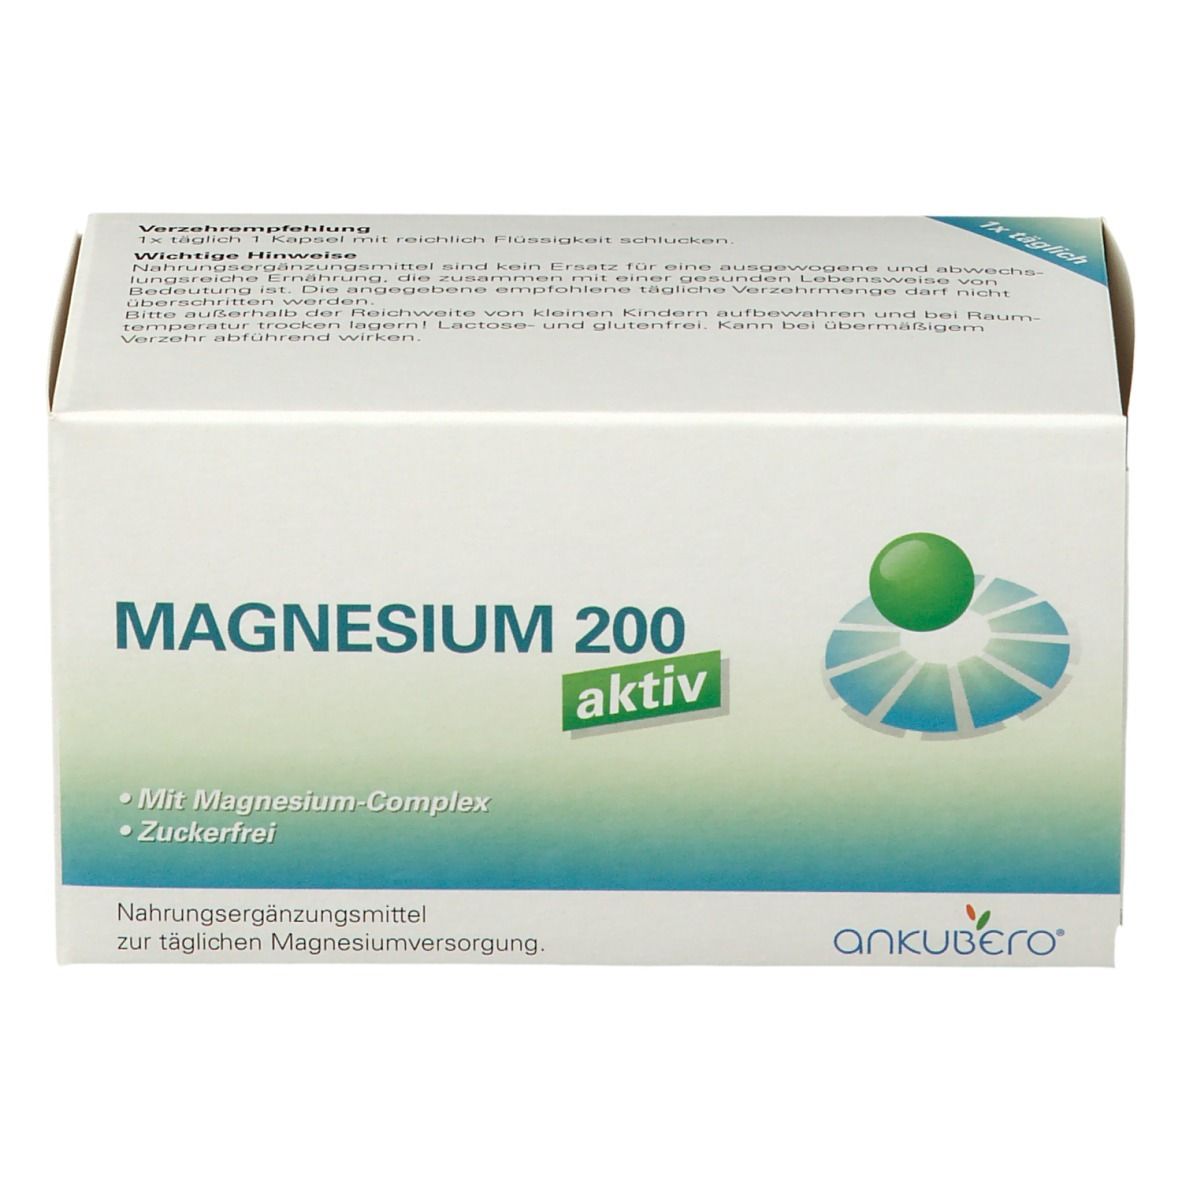 Magnesium 200 aktiv